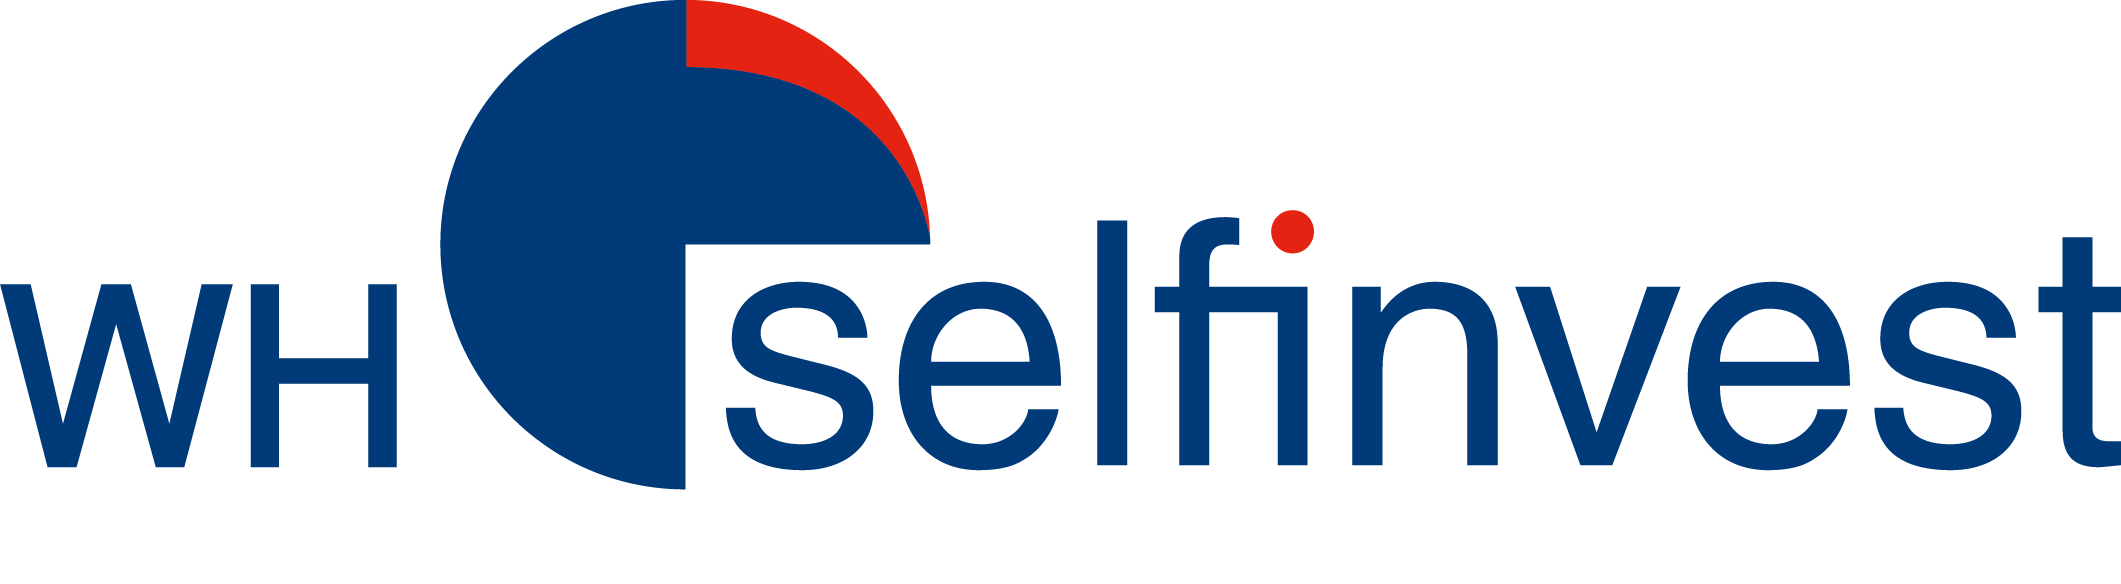 Logo WH Selfinvest